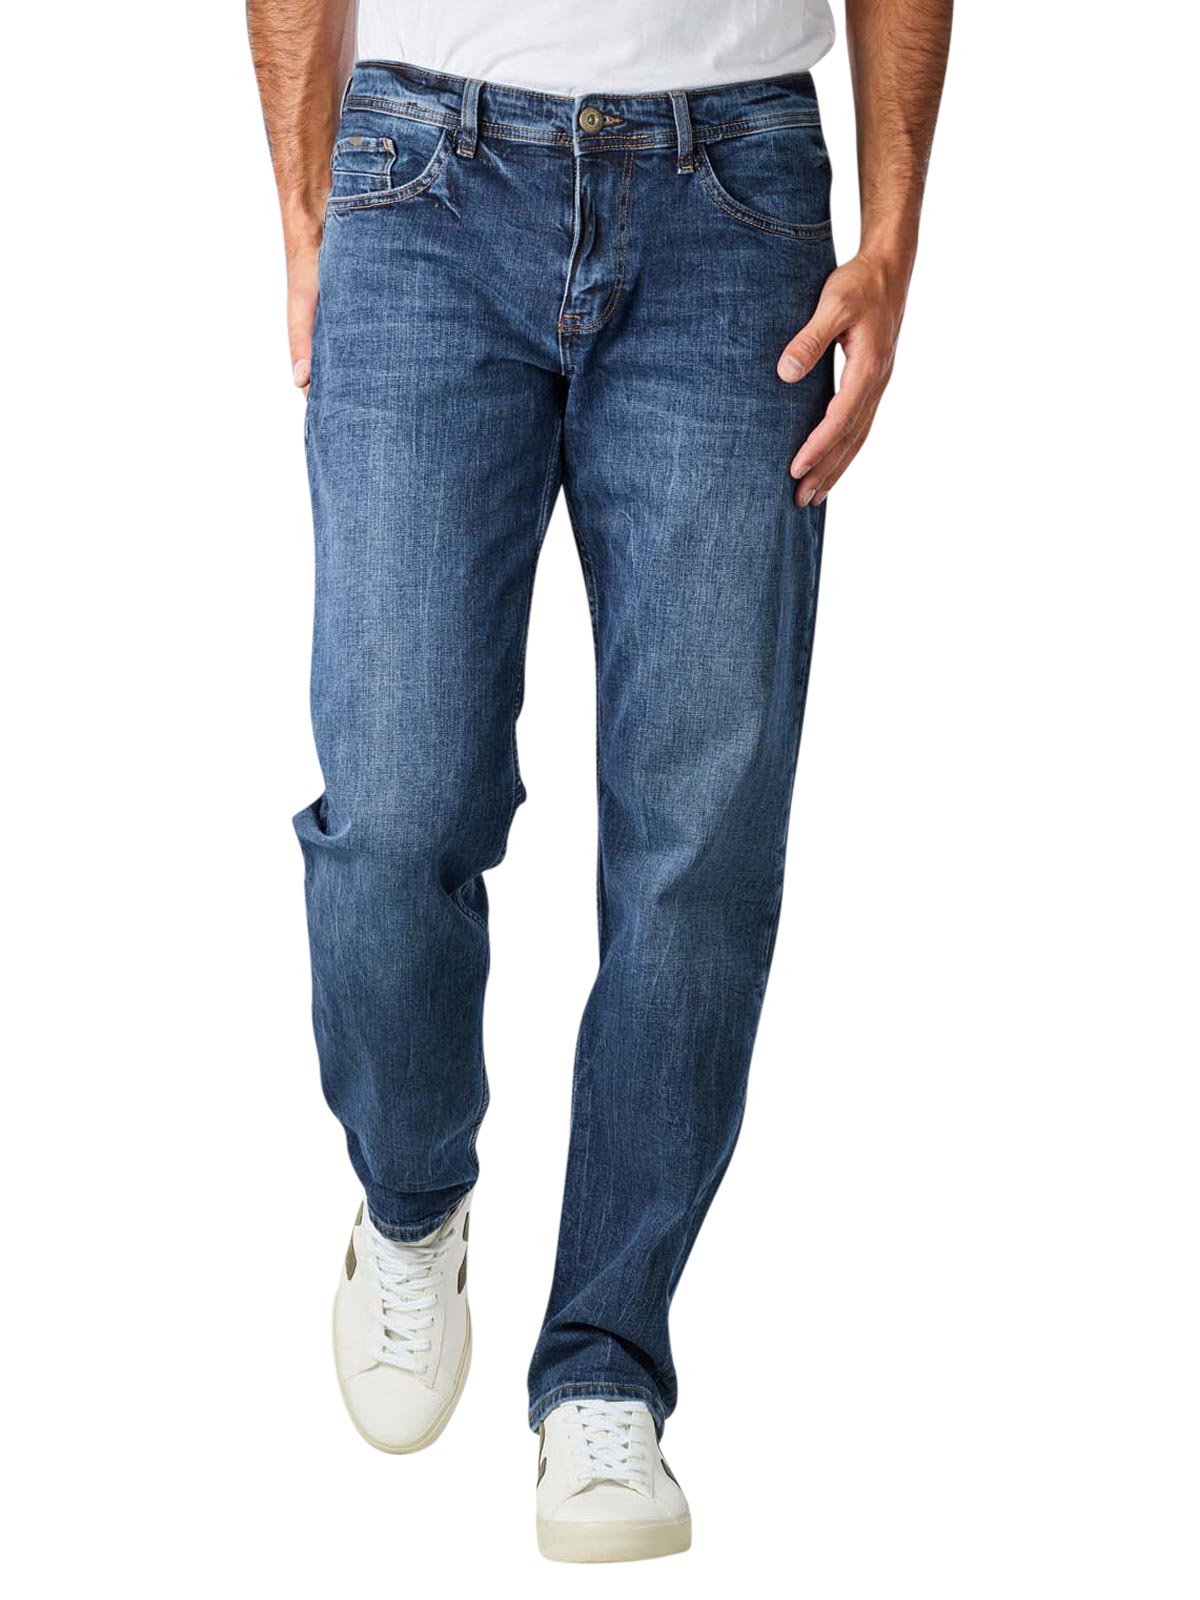 Cross Jeans Antonio Straight Fit Dark Blue Crinkle Cross Jeans Men's Jeans  | Free Shipping on  - SIMPLY LOOK GOOD